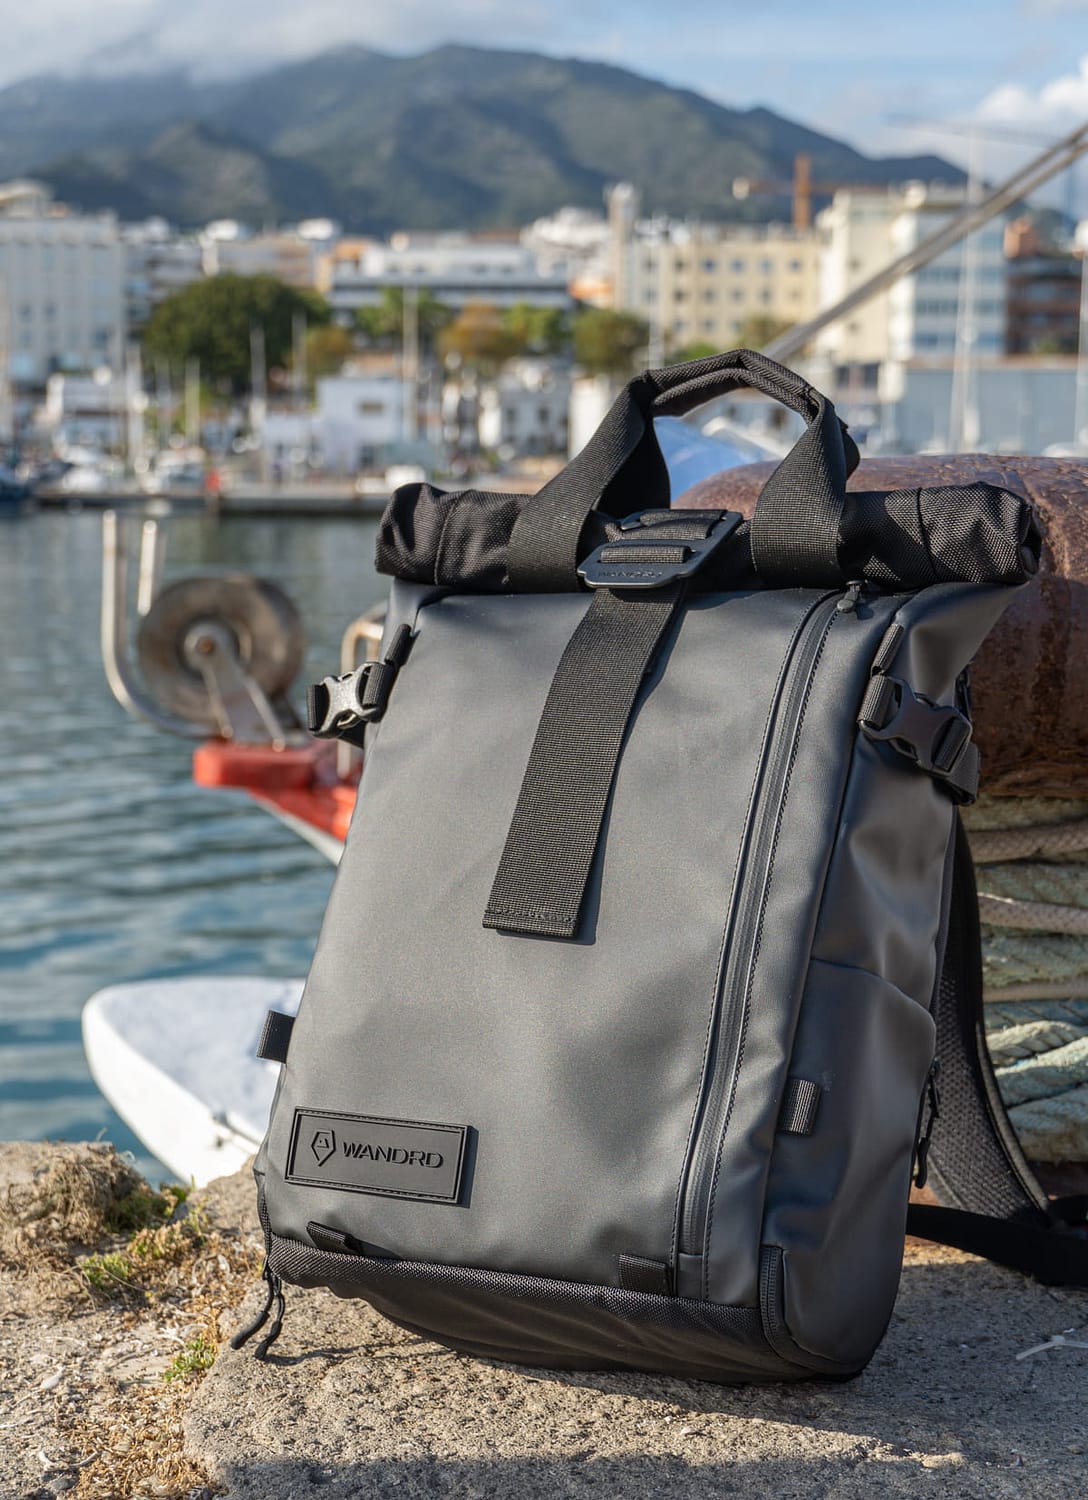 Best camera backpack for travel